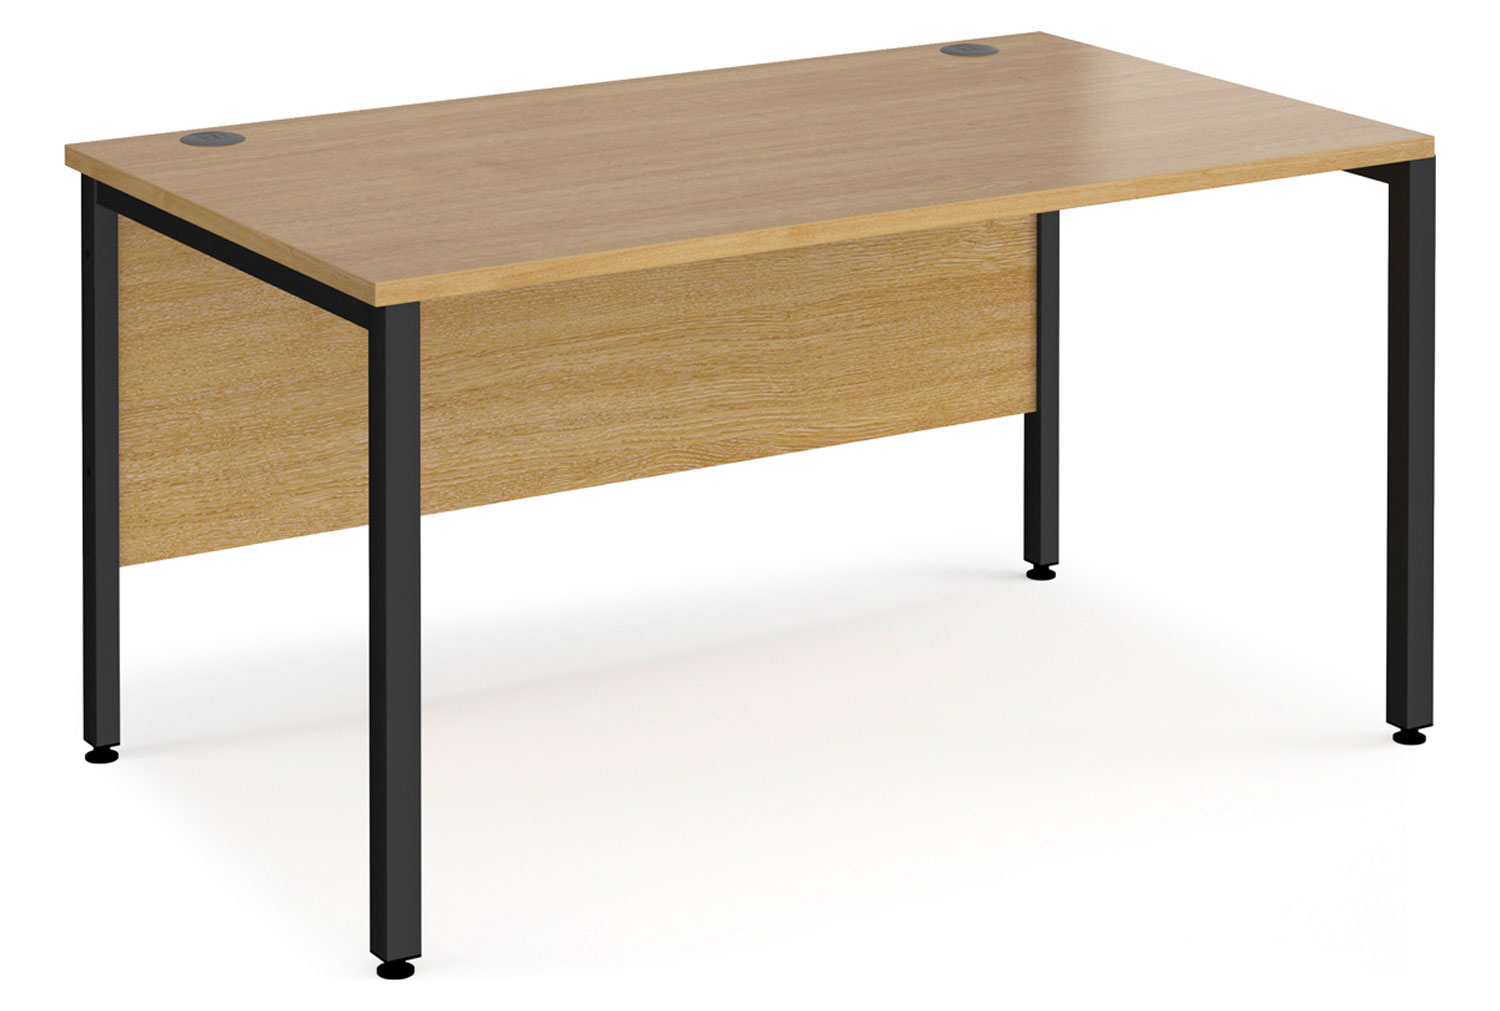 Value Line Deluxe Bench Rectangular Office Desks (Black Legs), 140wx80dx73h (cm), Oak